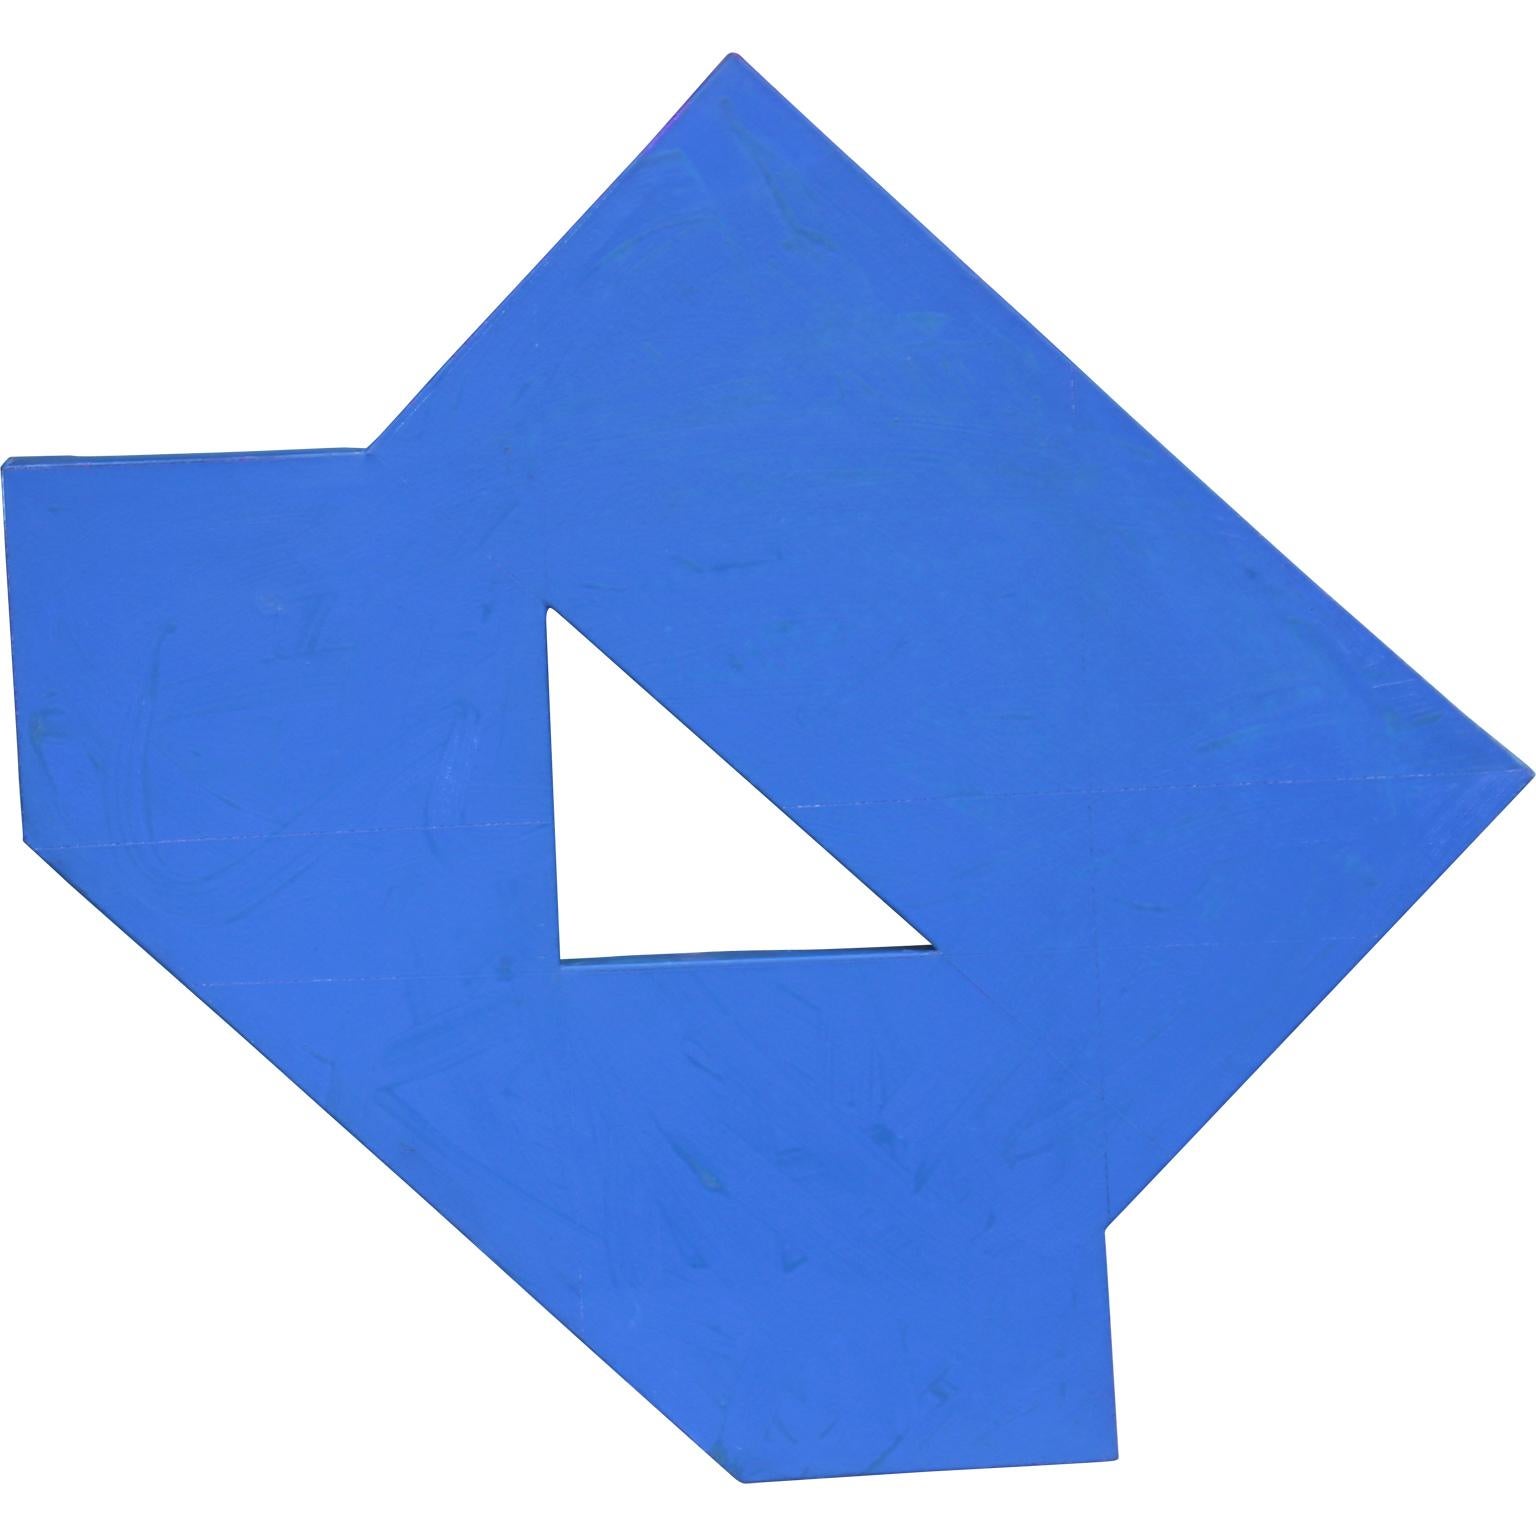 Atrium - Blue Geometric Abstract - Mixed Media Art by Gary Jurysta